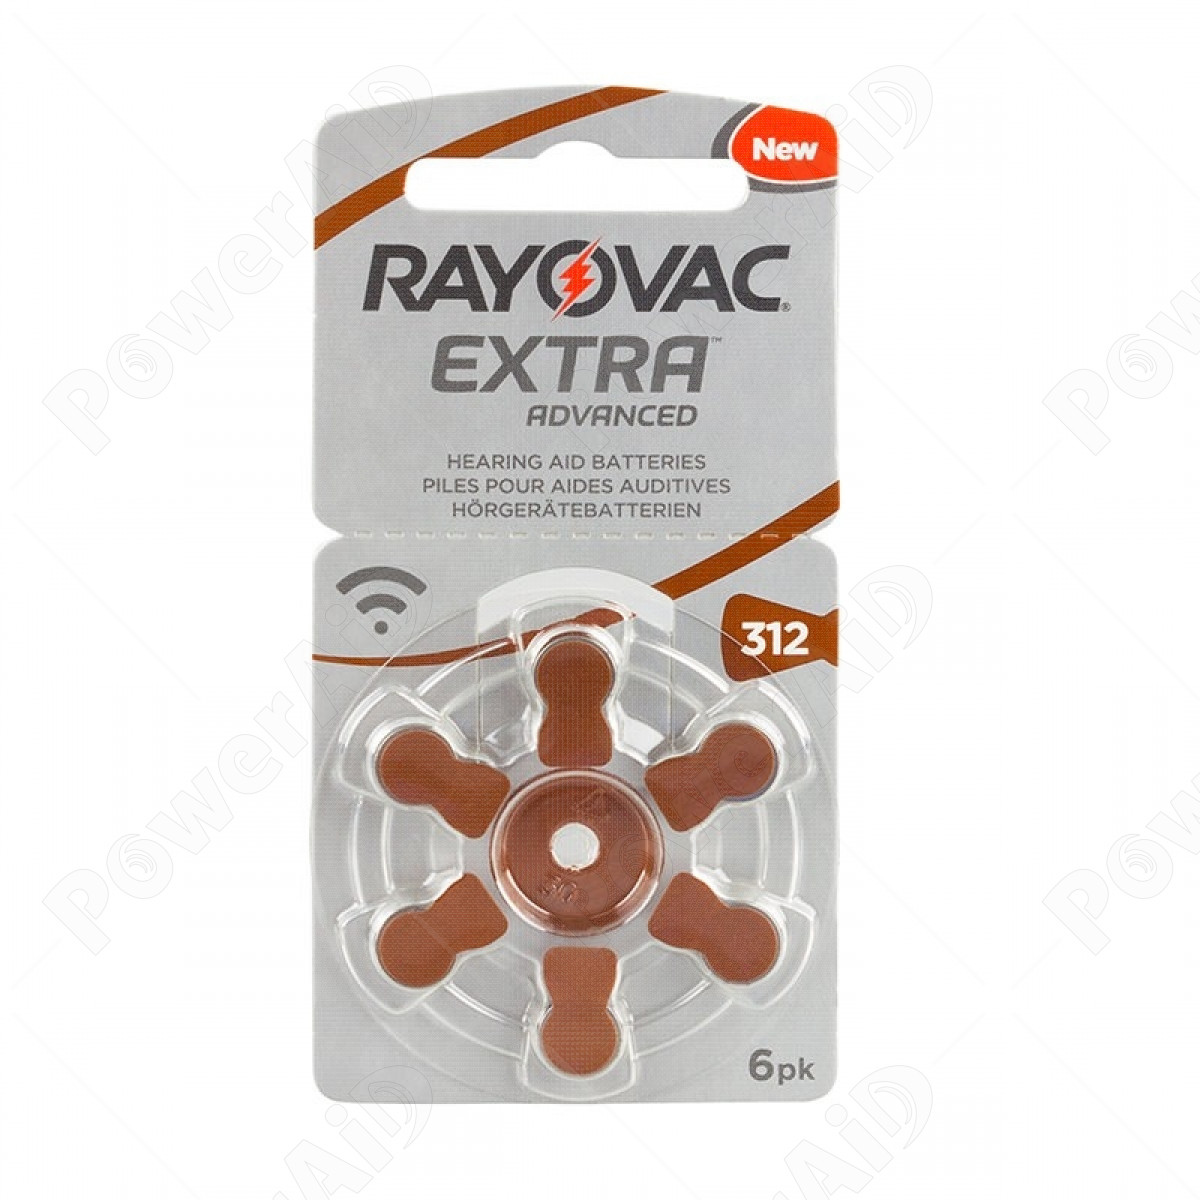 Rayovac - Blister 6 pile Acustiche Extra Advanced 312